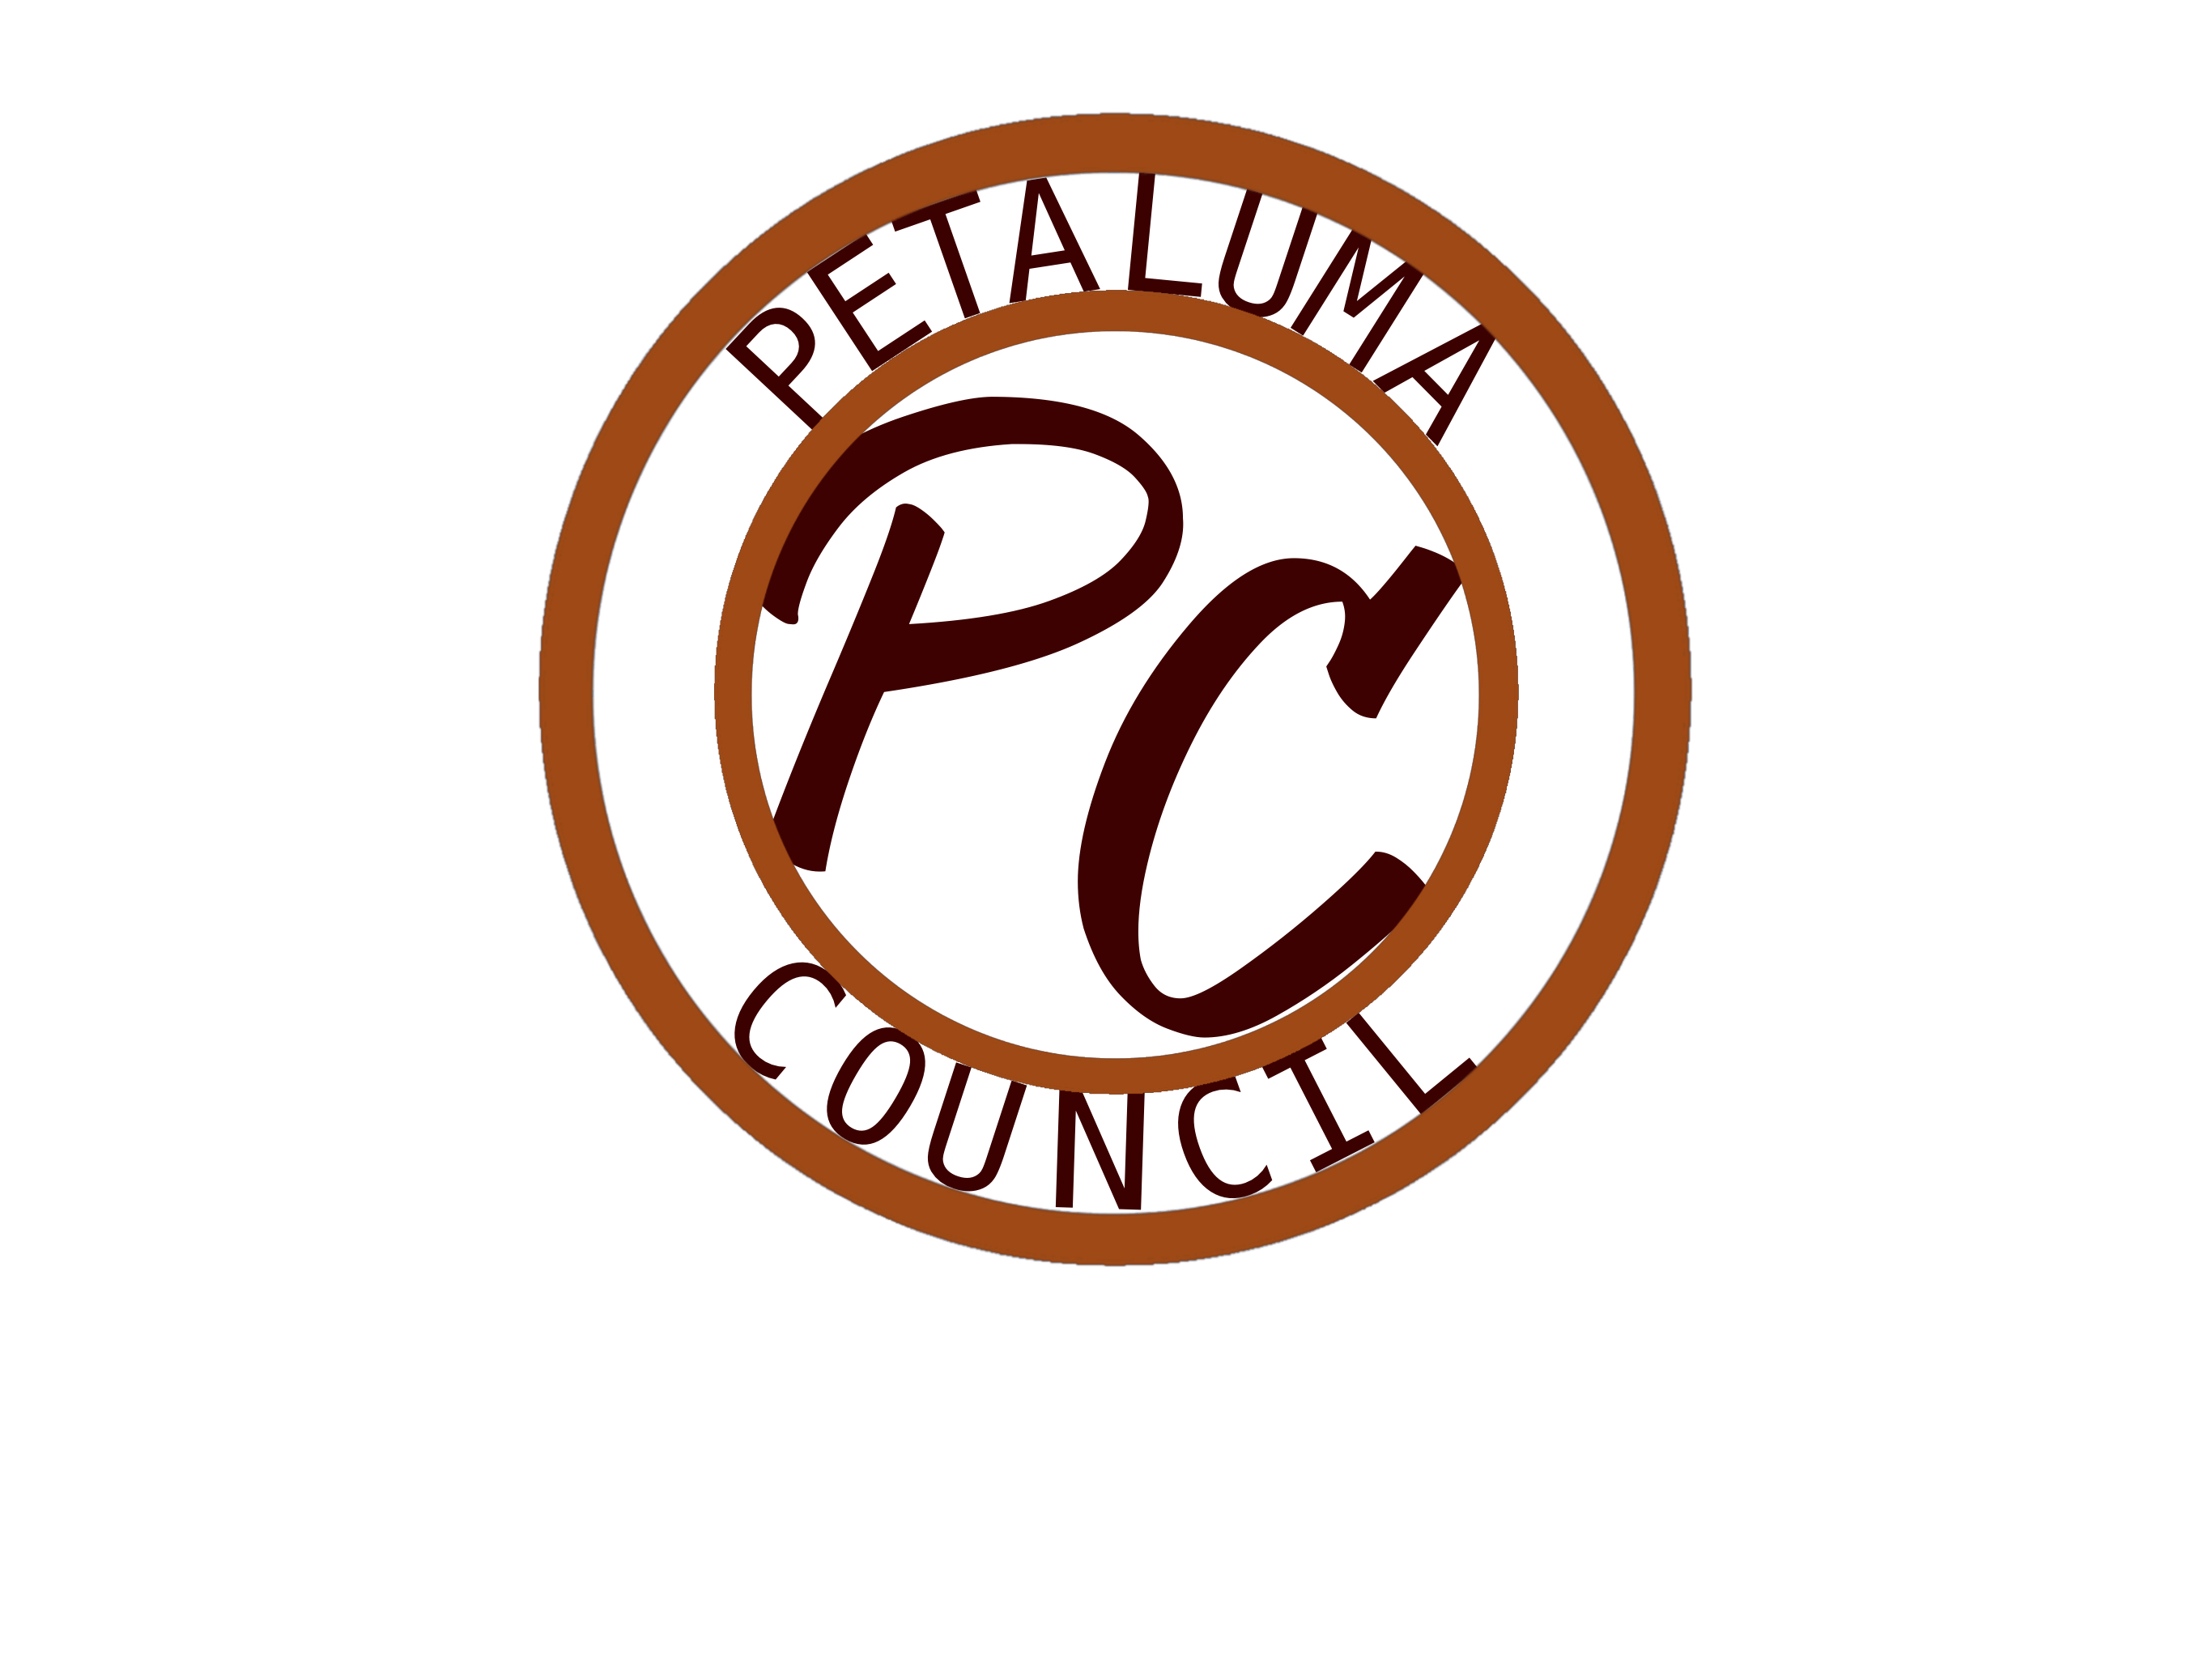 petaluma council logo